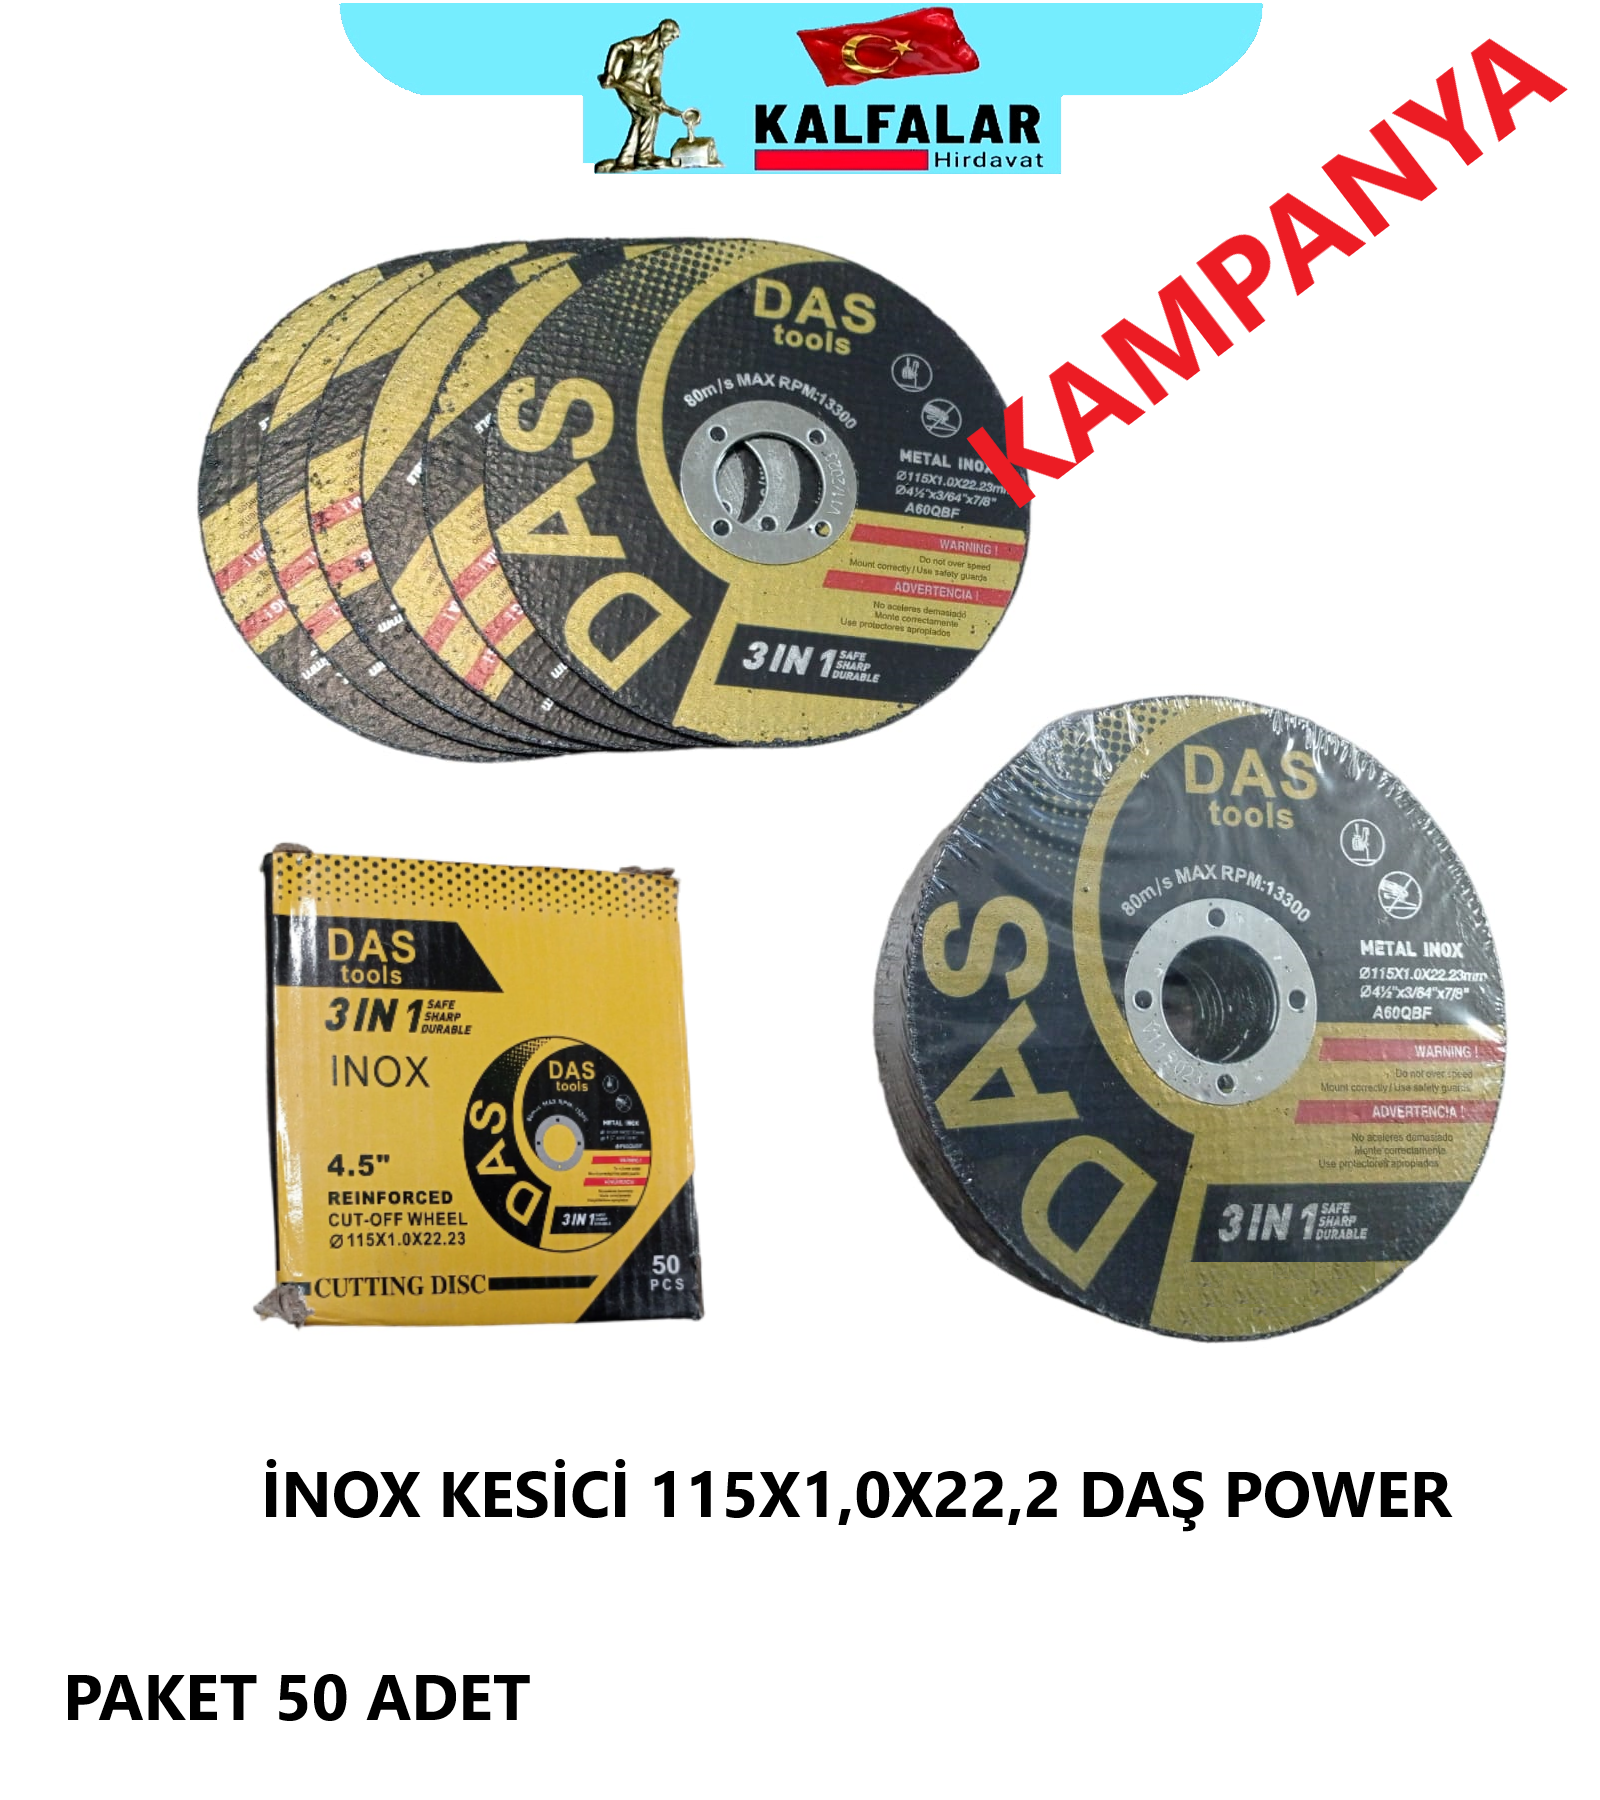 İNOX KESİCİ 115X1,0X22,2 DAŞ POWER